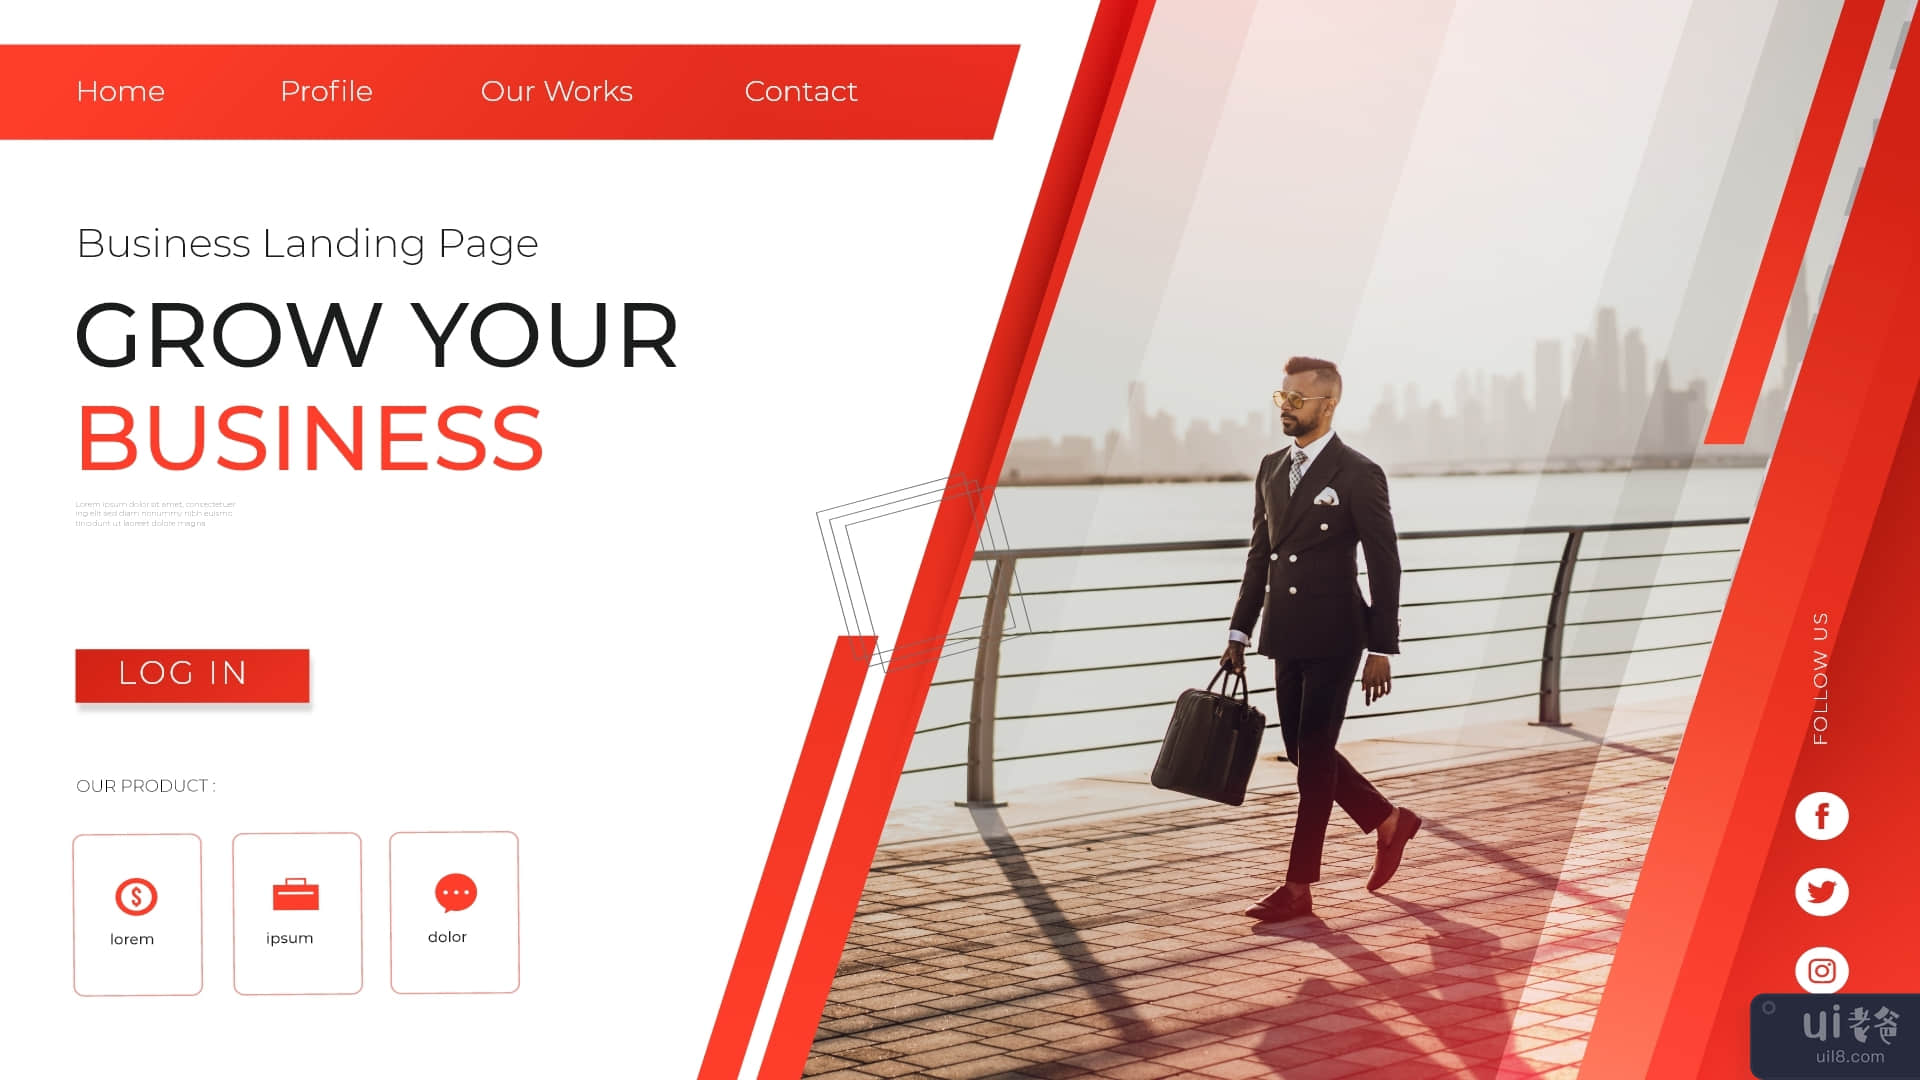 业务登陆页面标题设计(Business Landing Page Header Design)插图